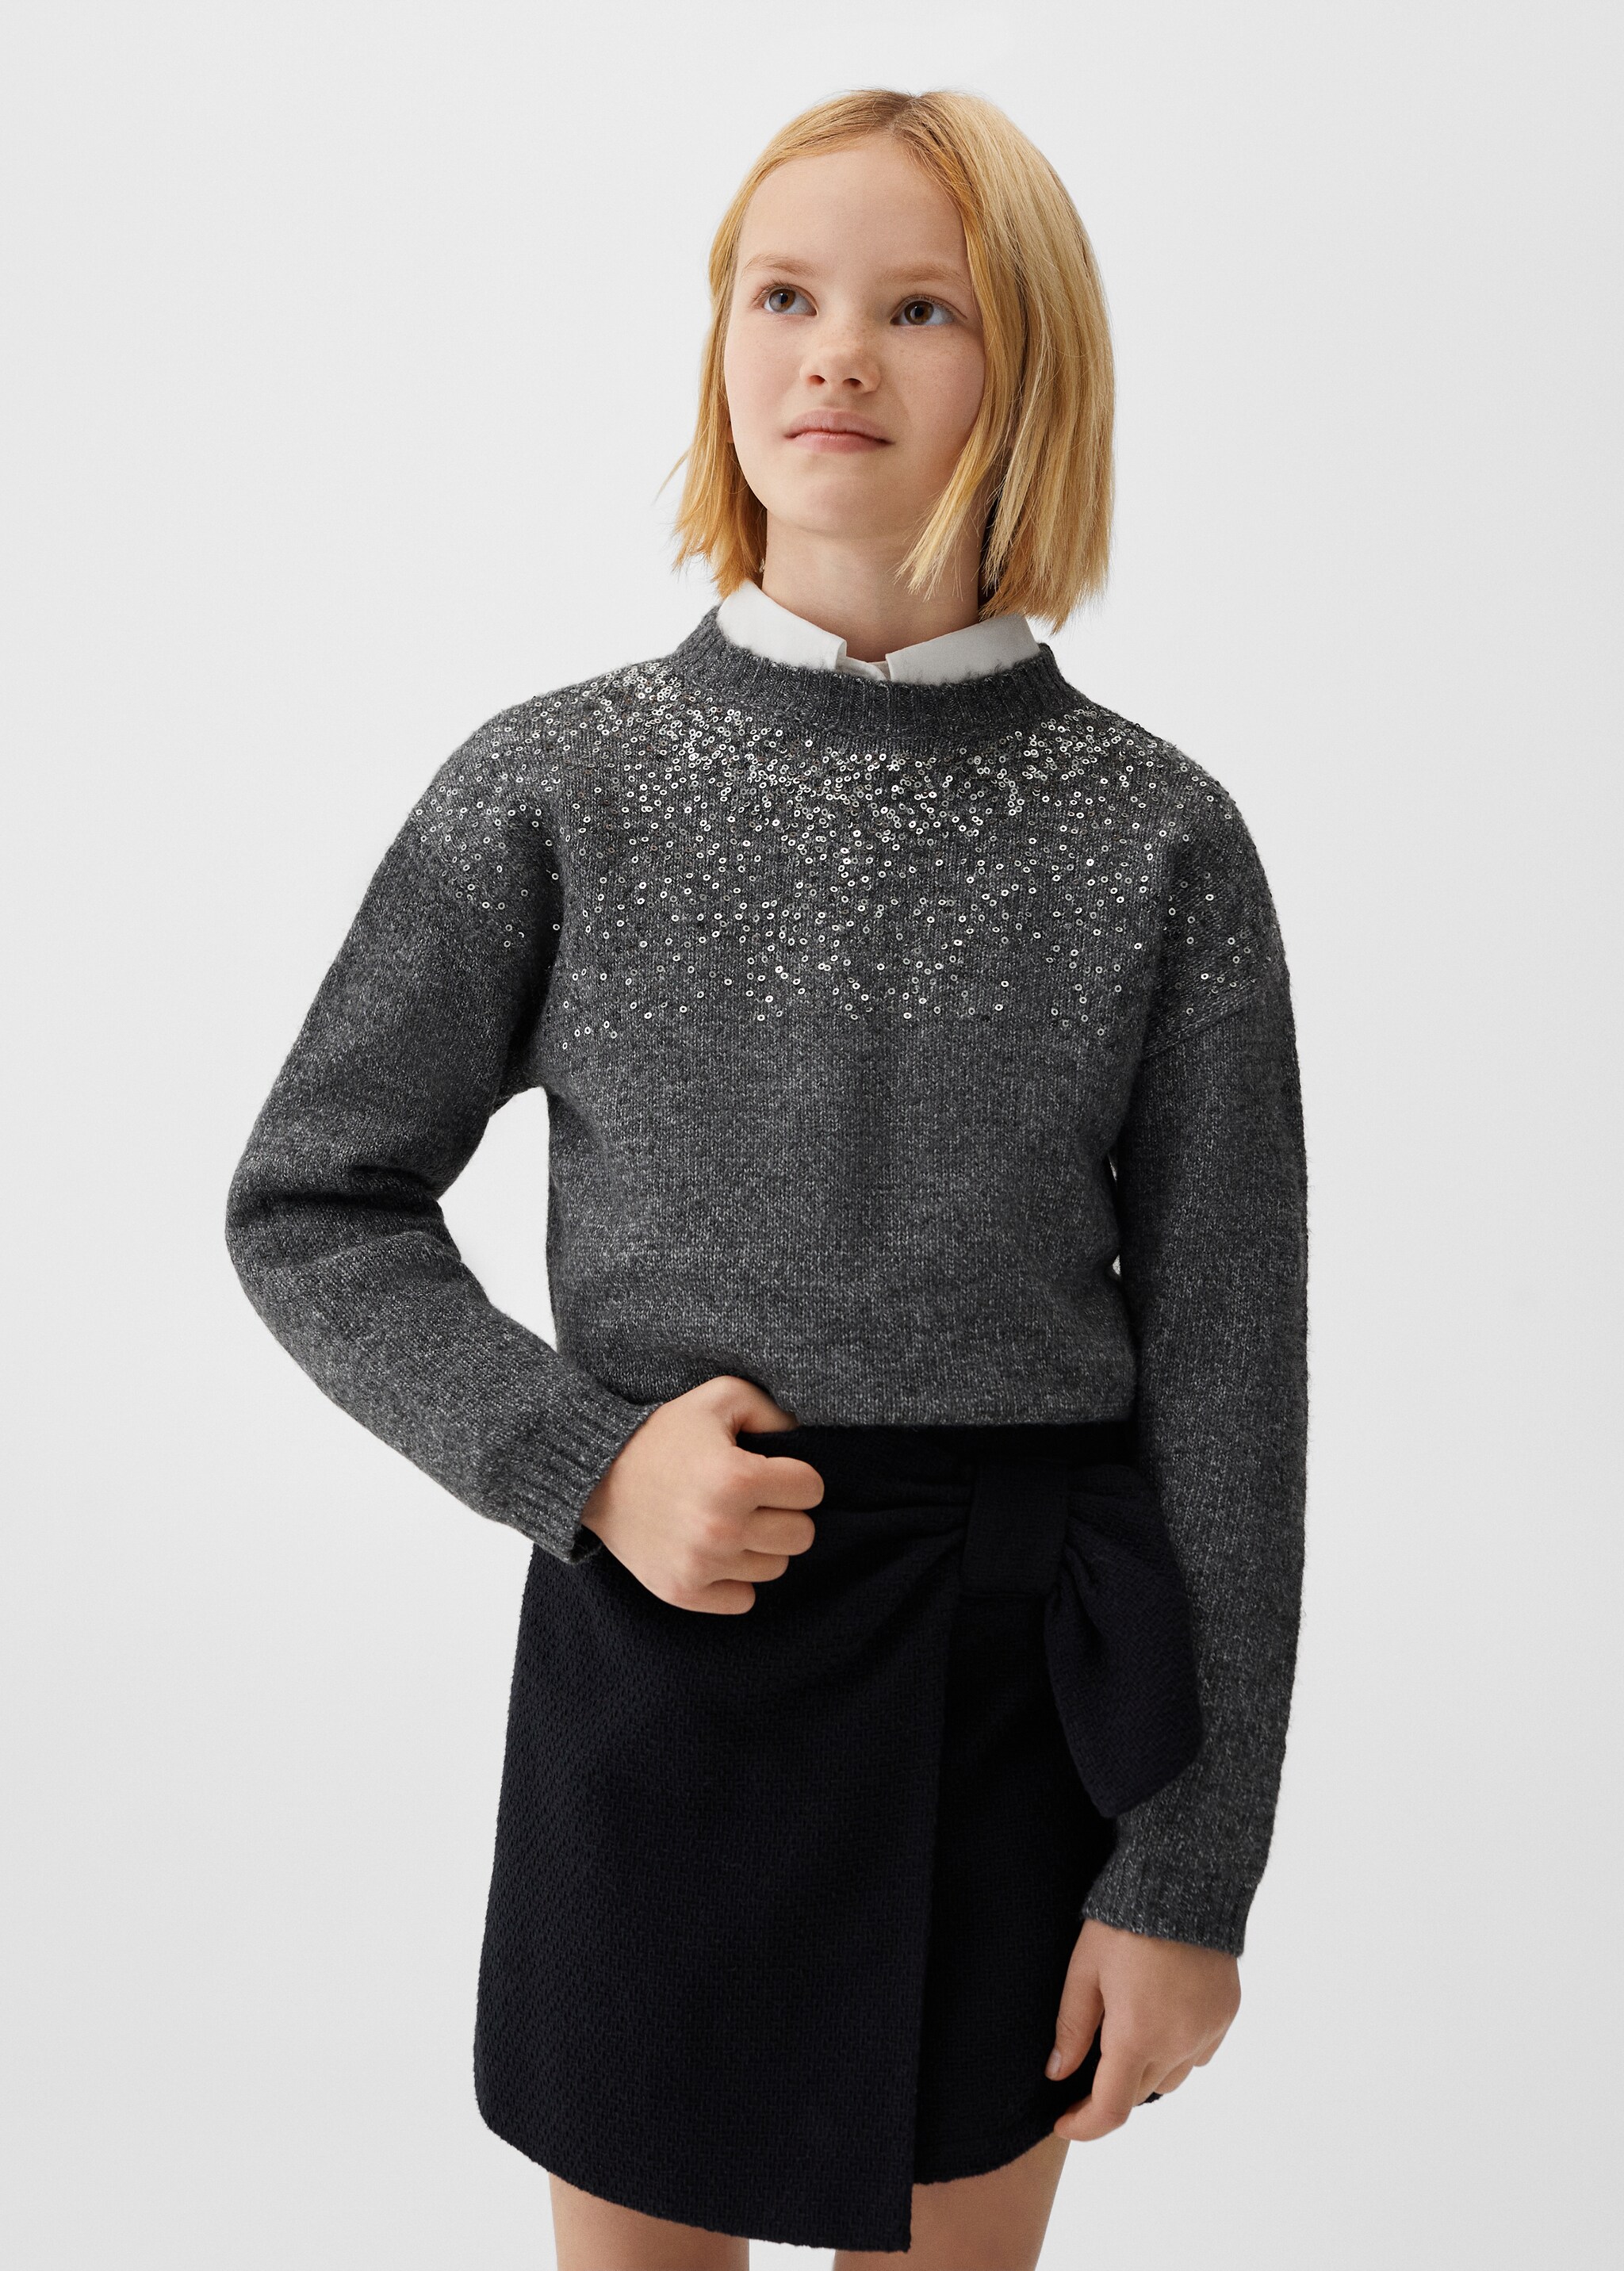 Knit paillette sweater - Medium plane